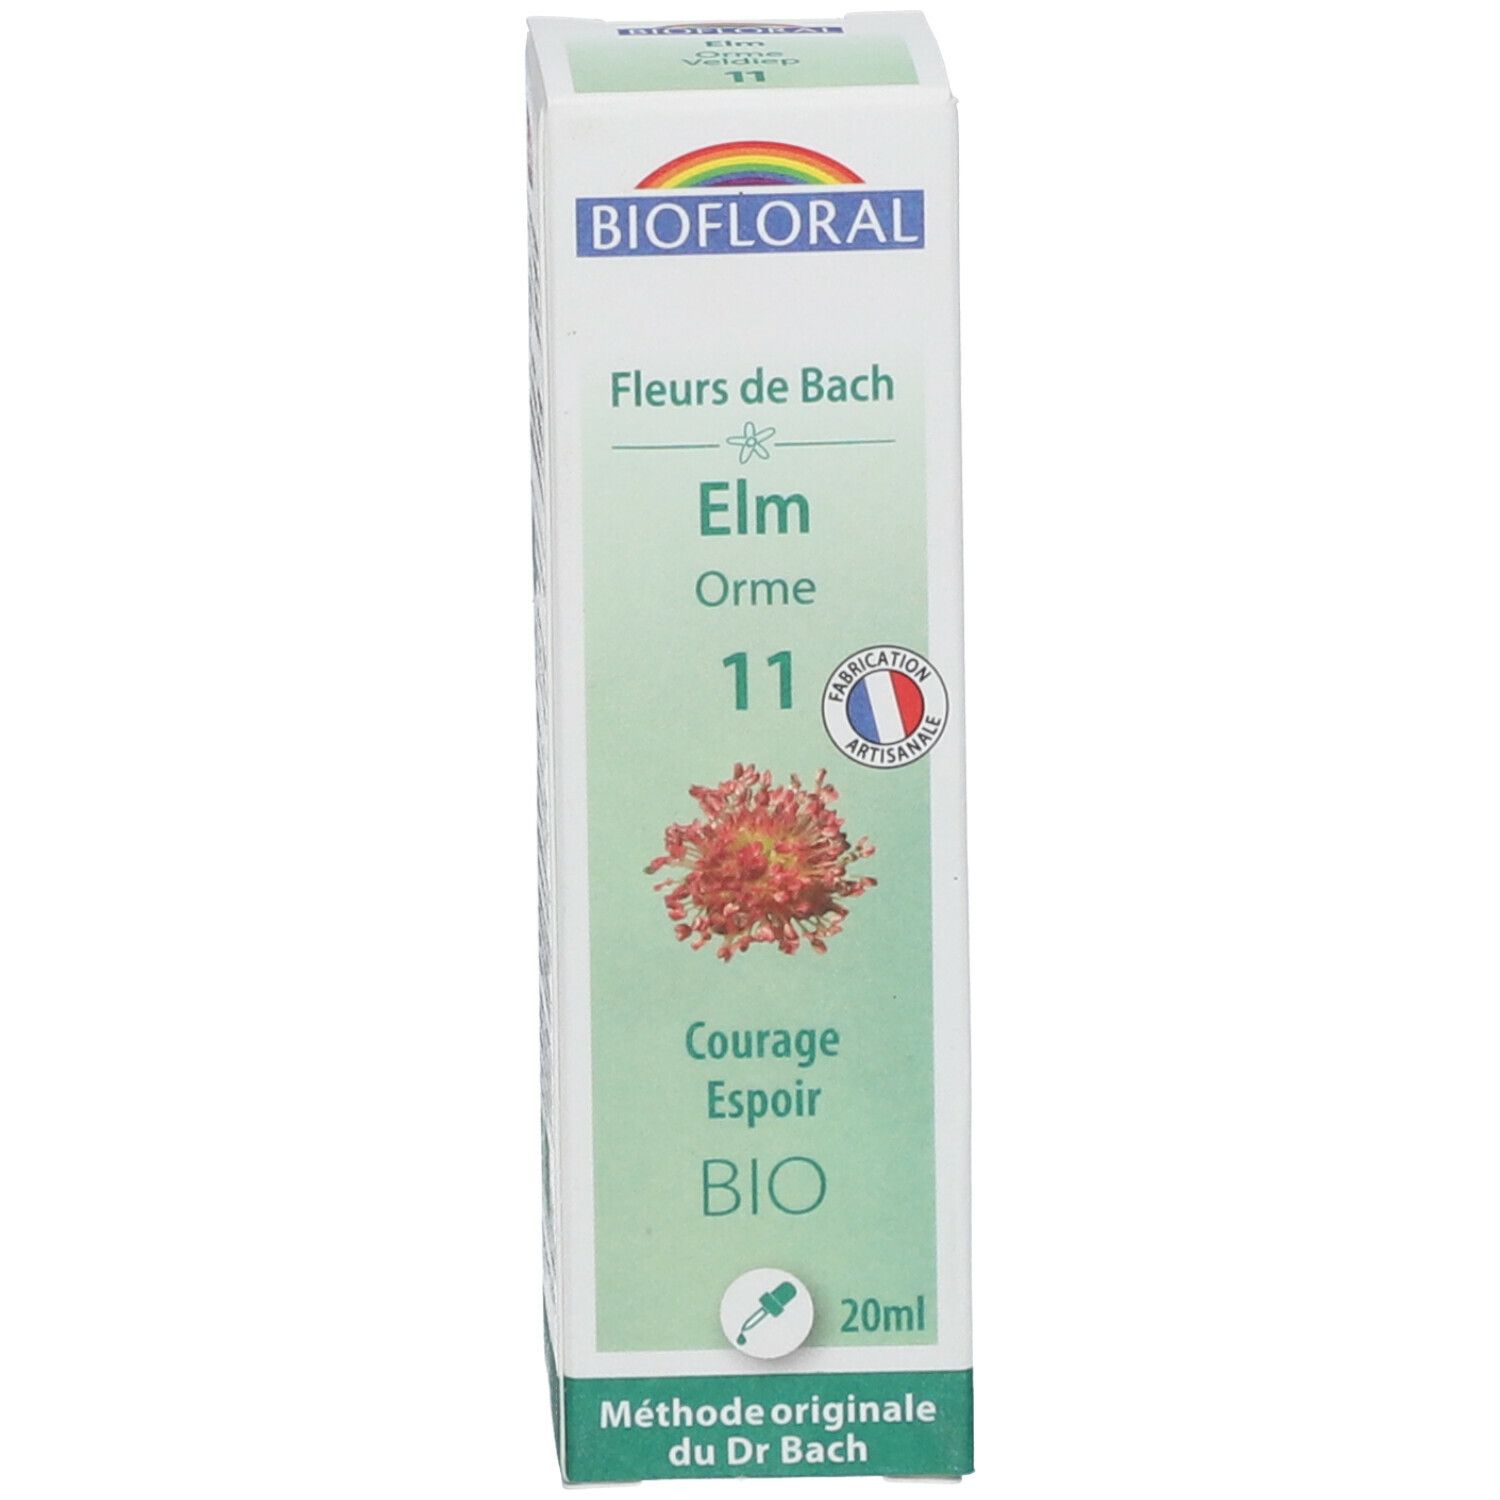 BIOFLORAL 11 - Elm - Orme - 20 ml